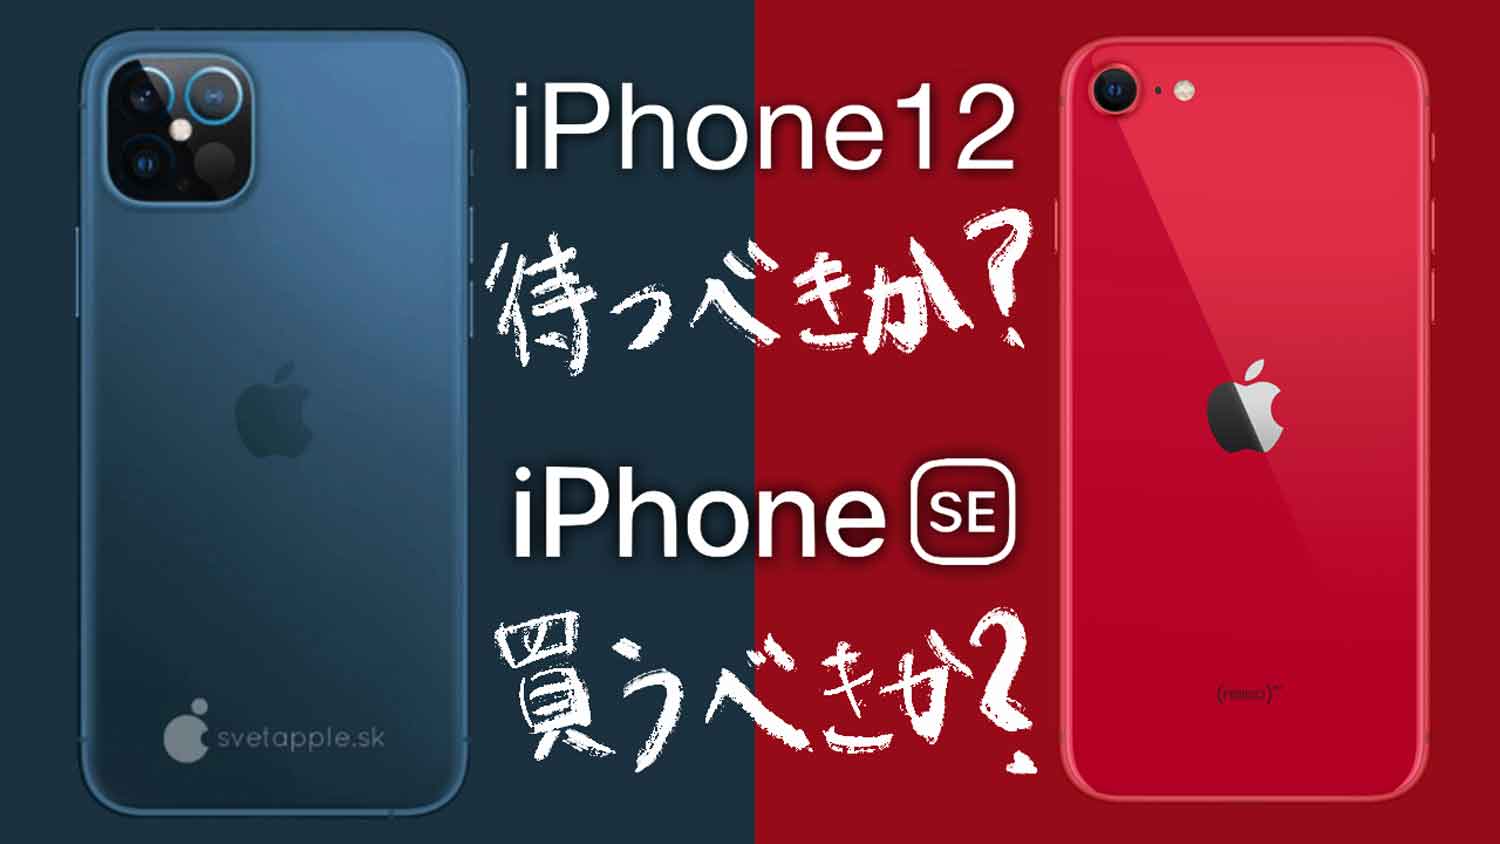 iphone12-iphonese-2020